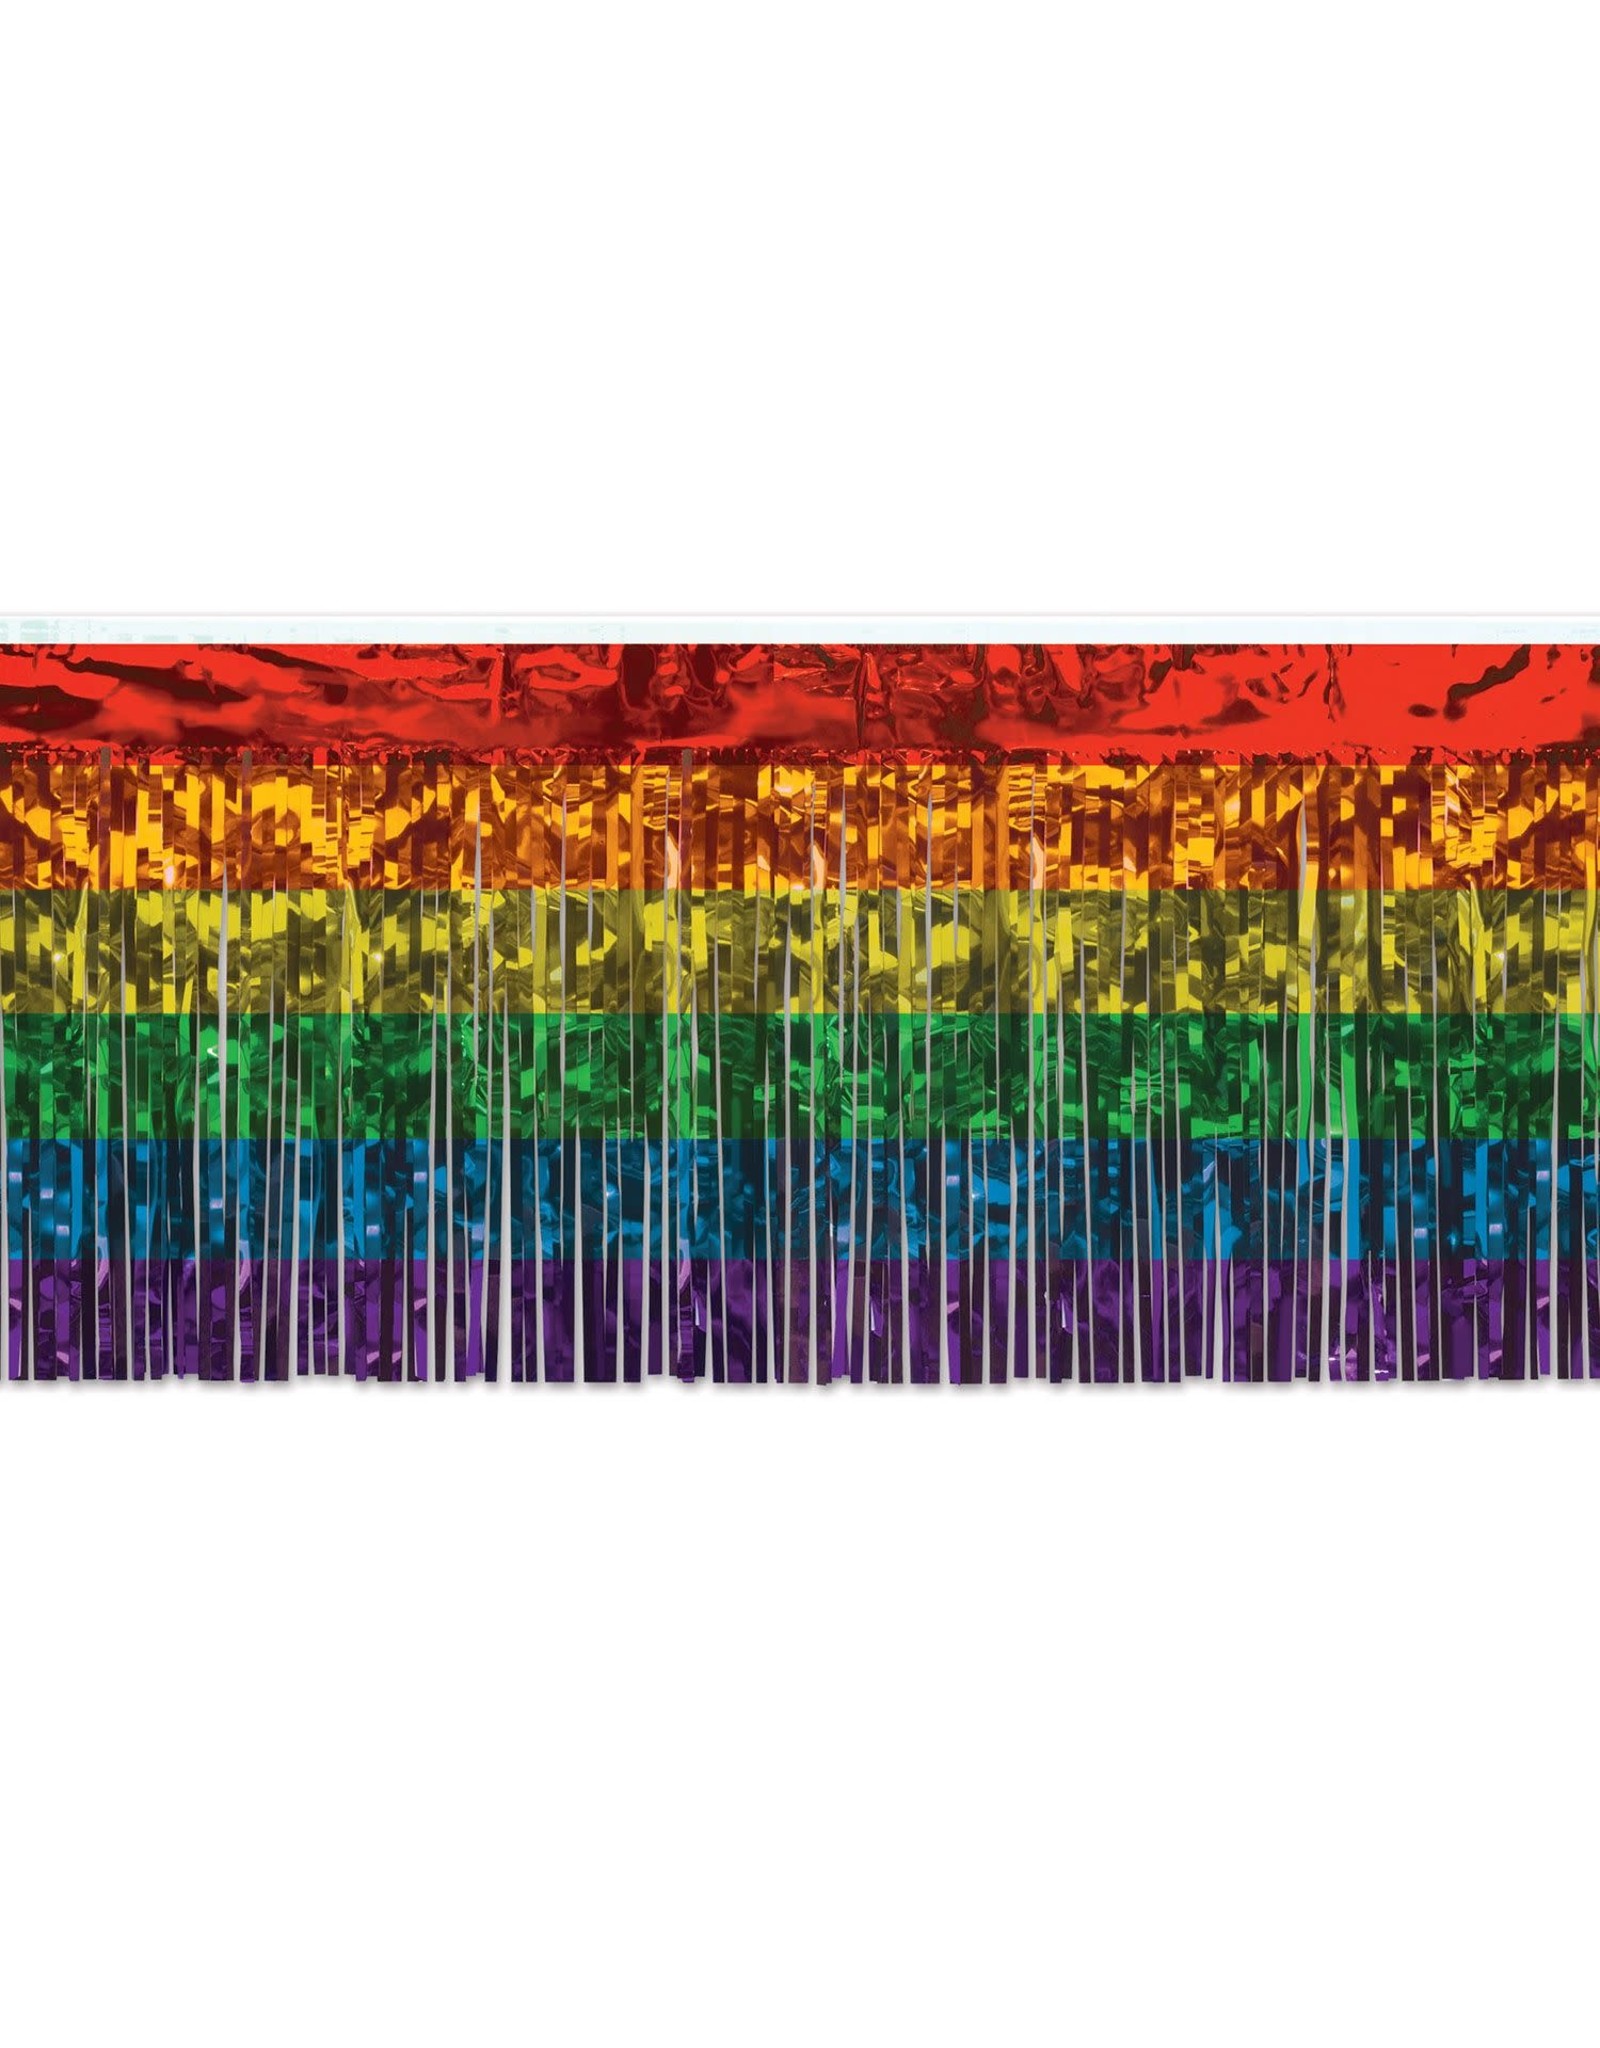 Beistle Rainbow Metallic Fringe Table Skirting 30 Inch x 14 Feet